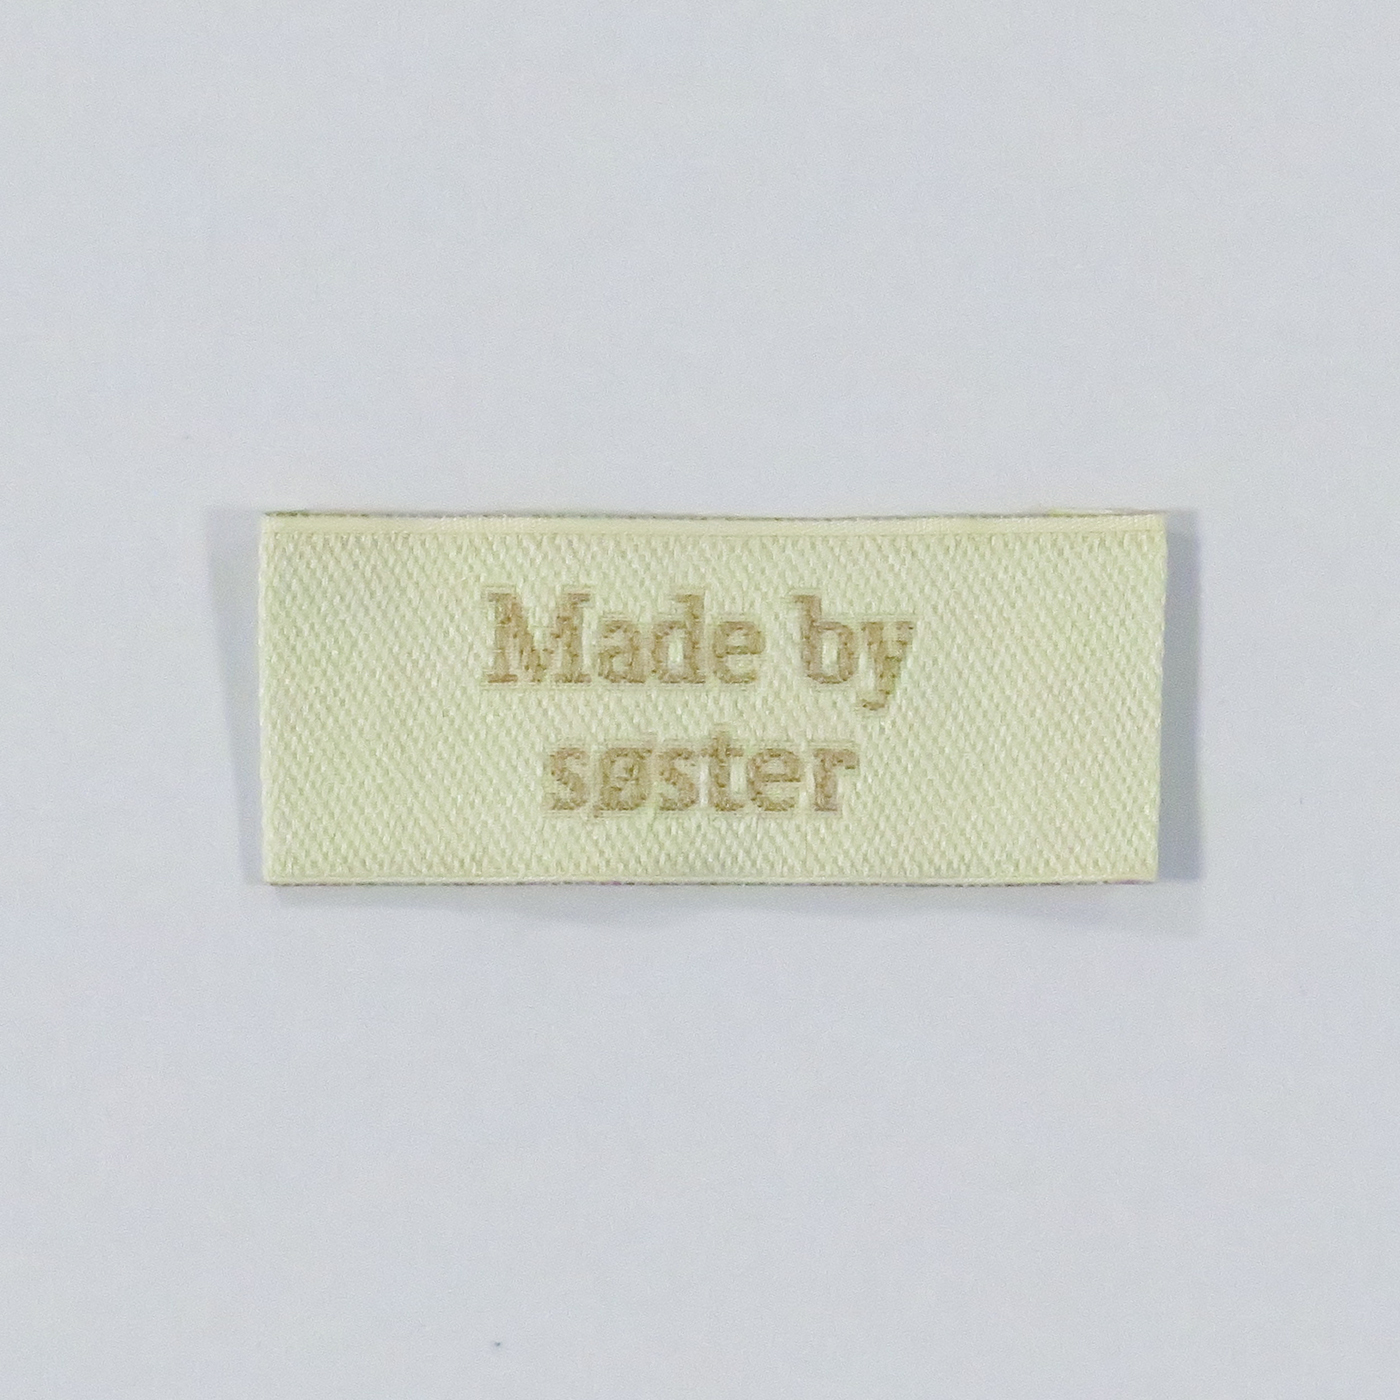 "Made by Søster"